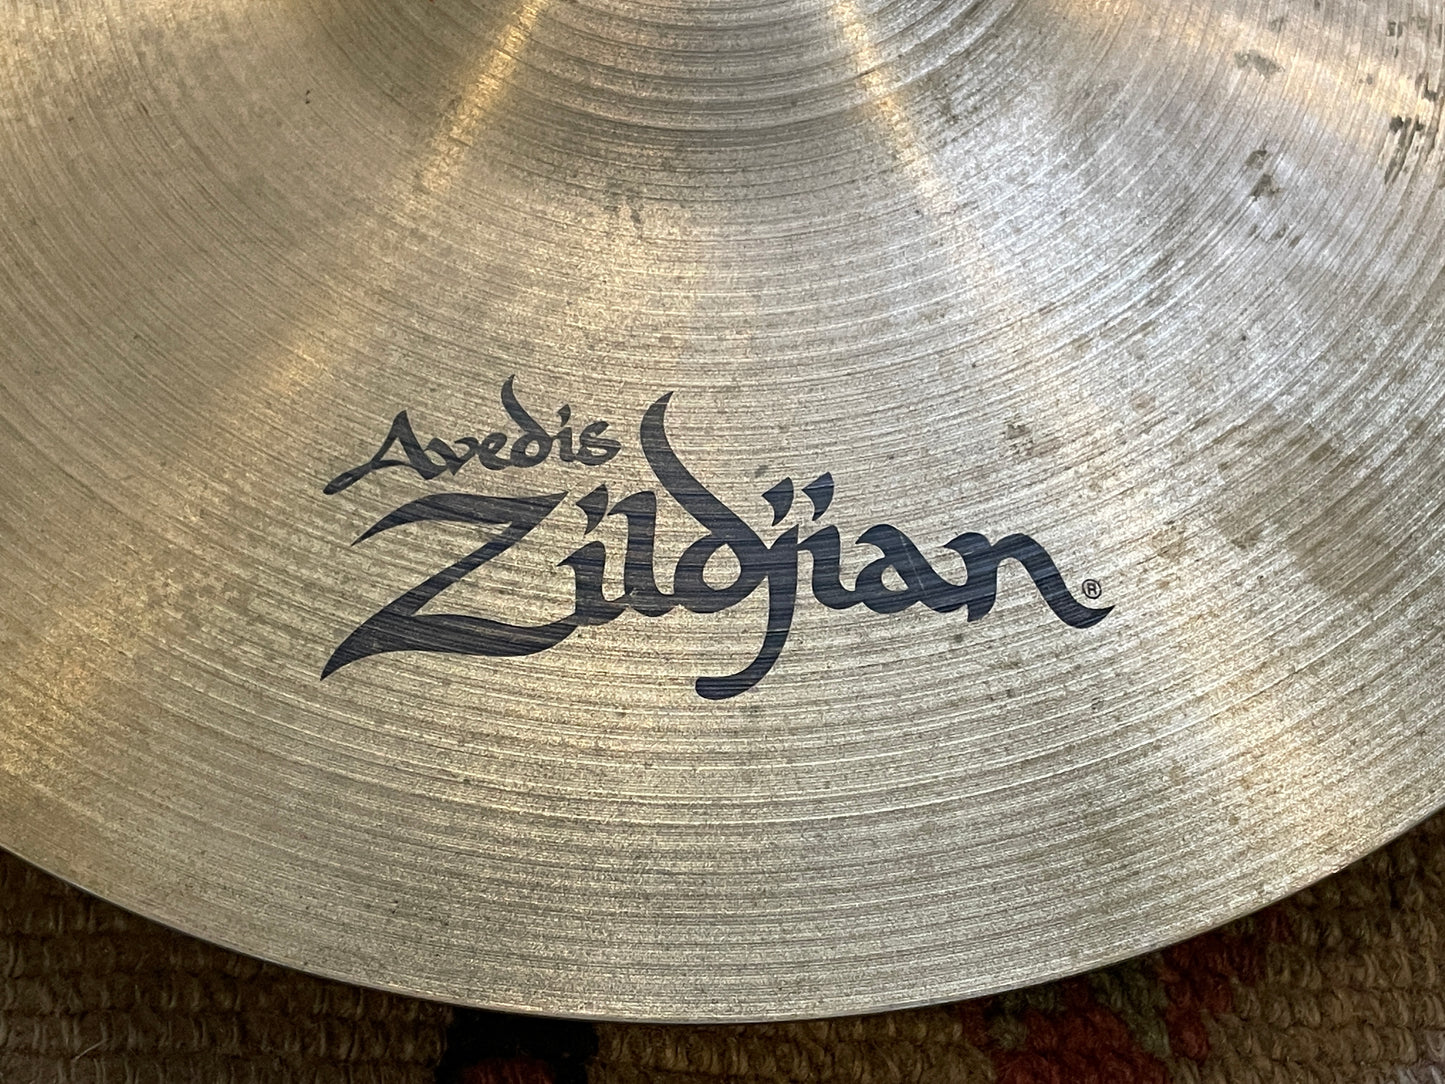 10" Zildjian A Splash Cymbal 280g